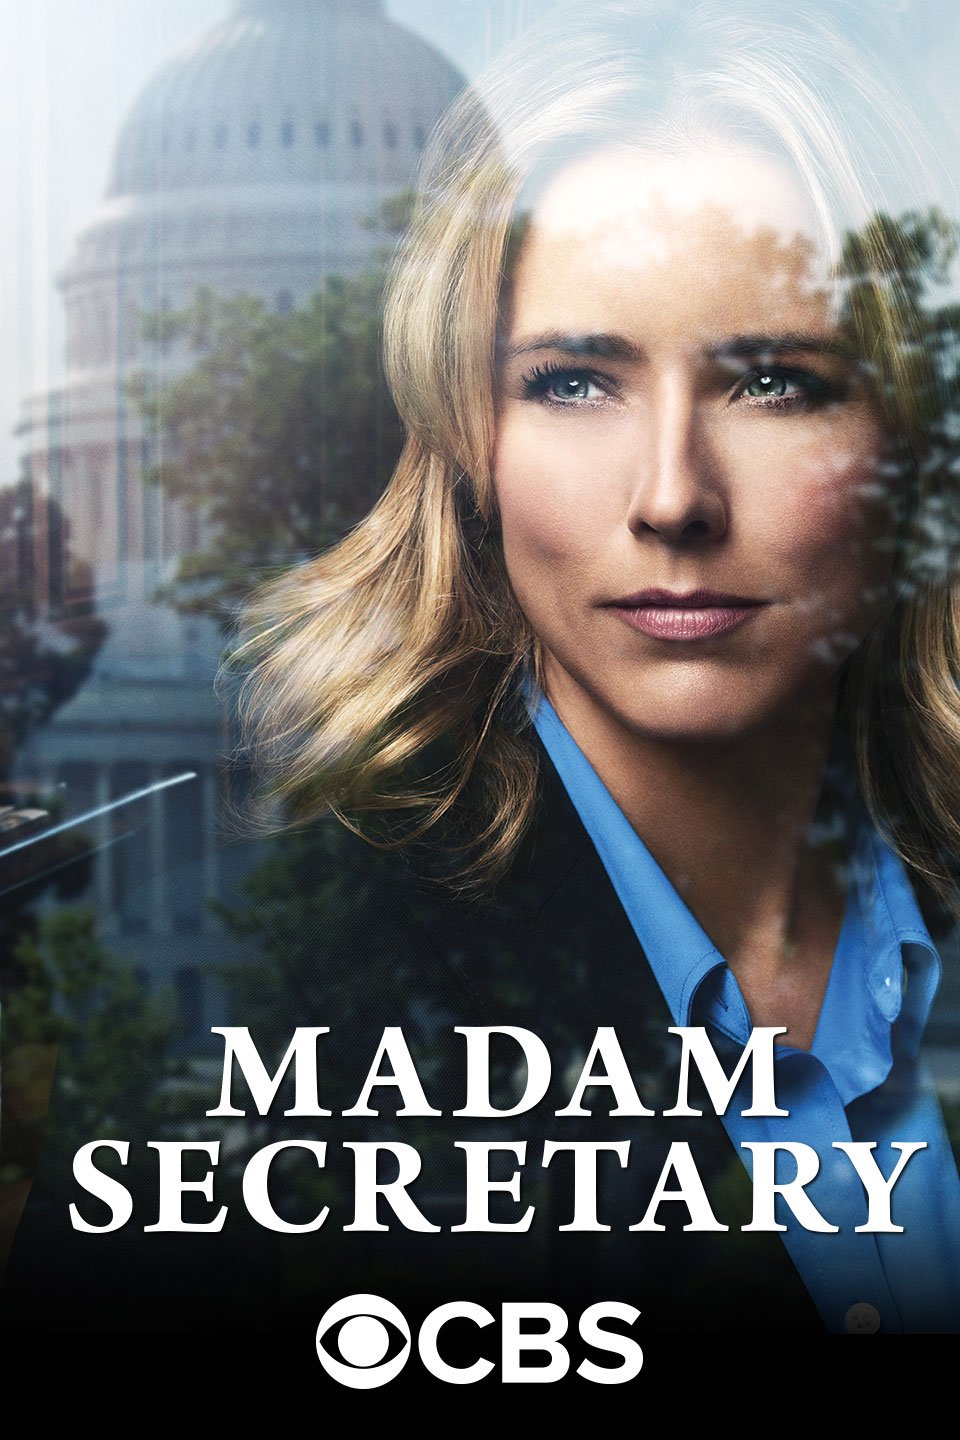 Poster of the movie Madam Secretary